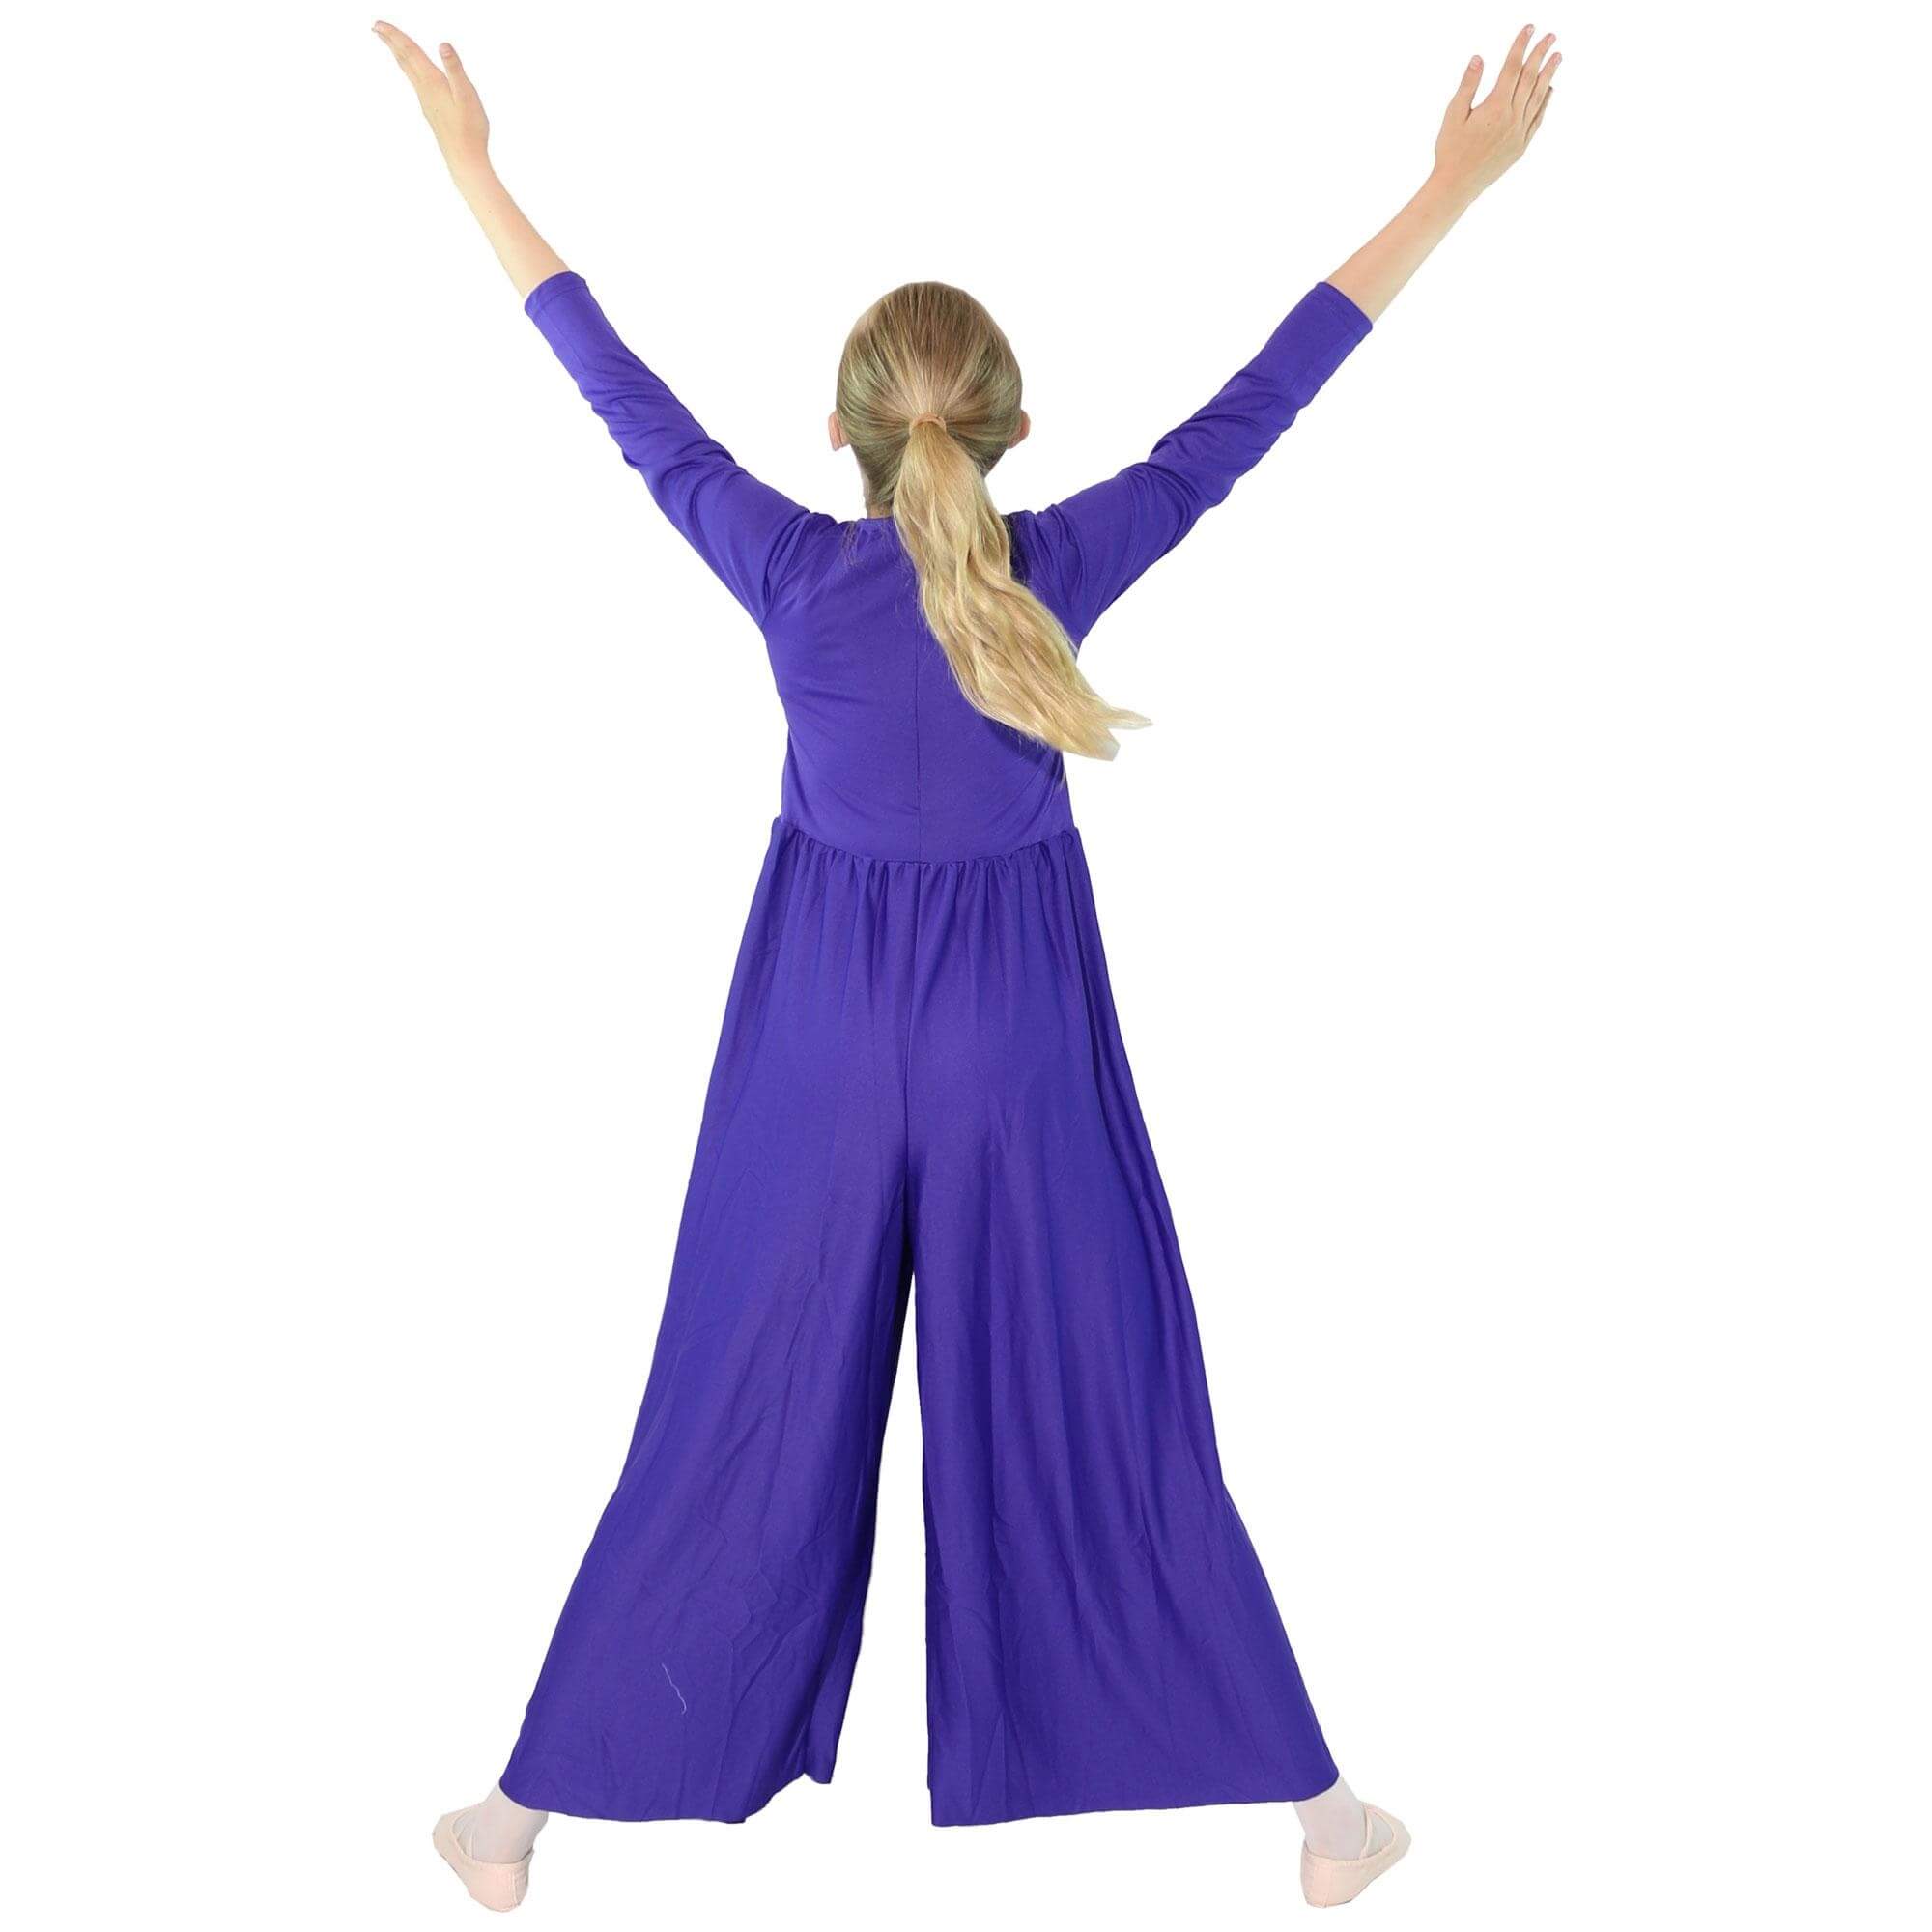 Danzcue Child Long Sleeve Crew Neck Praise Dance Jumpsuit - Click Image to Close